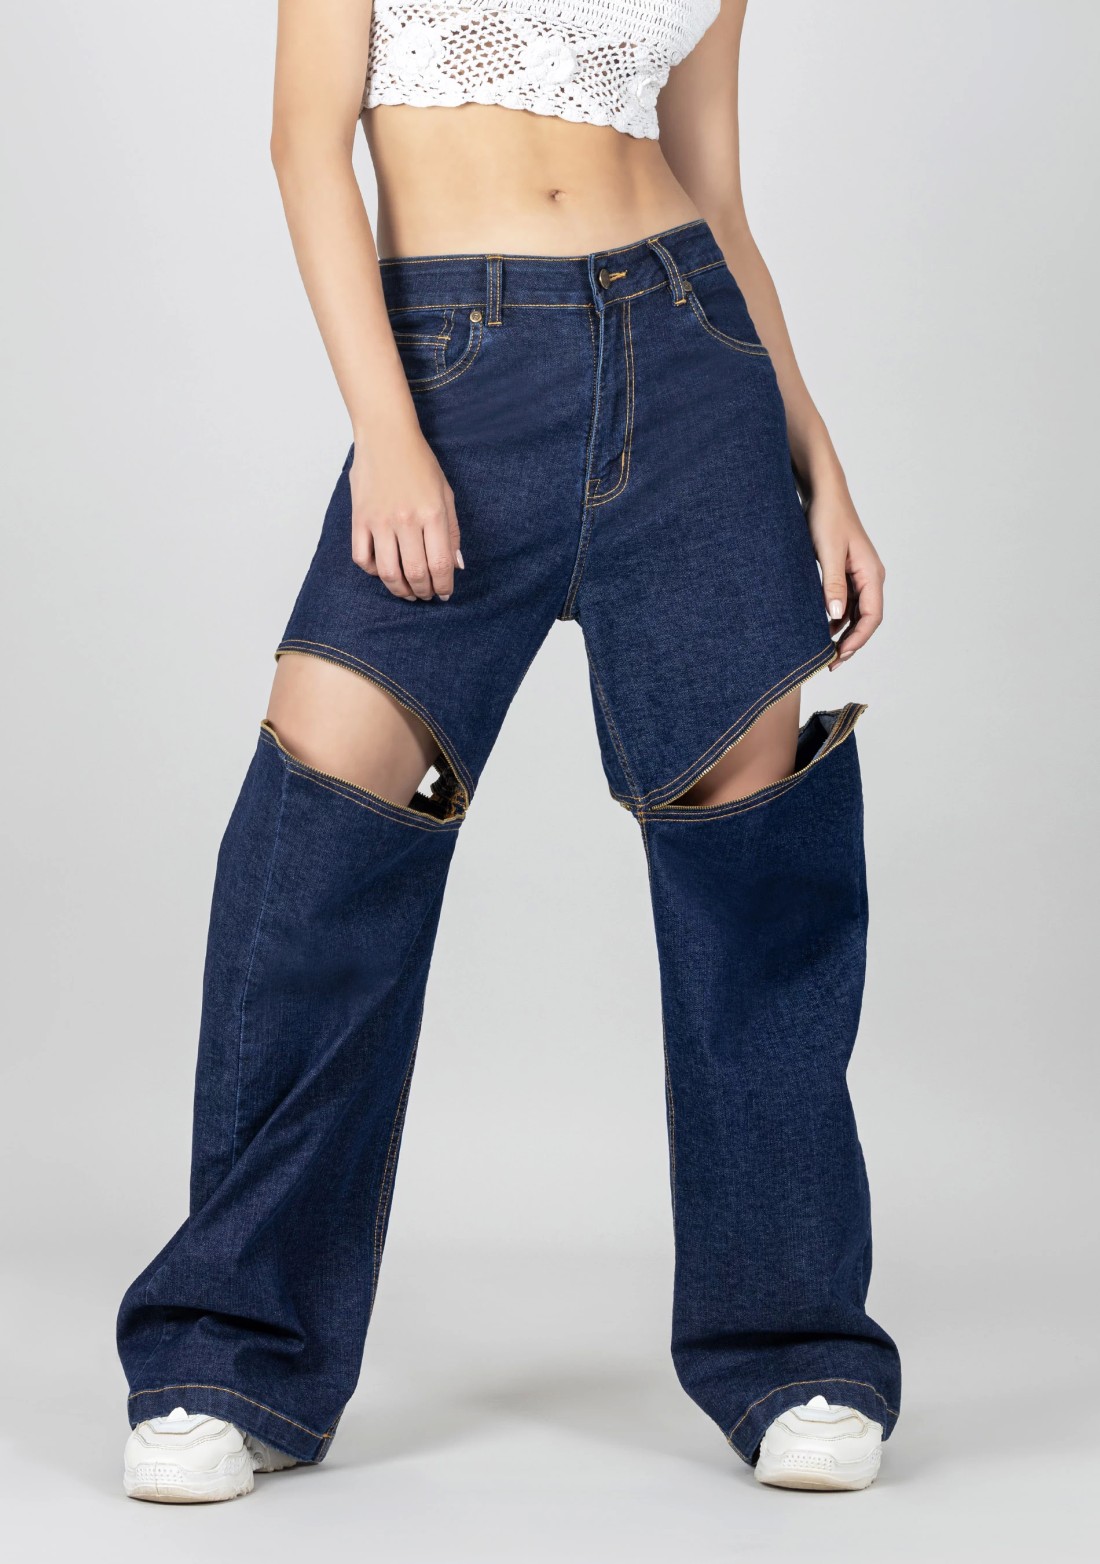 Deal dark blue ripped jeans - G3-GJE0663 | G3fashion.com